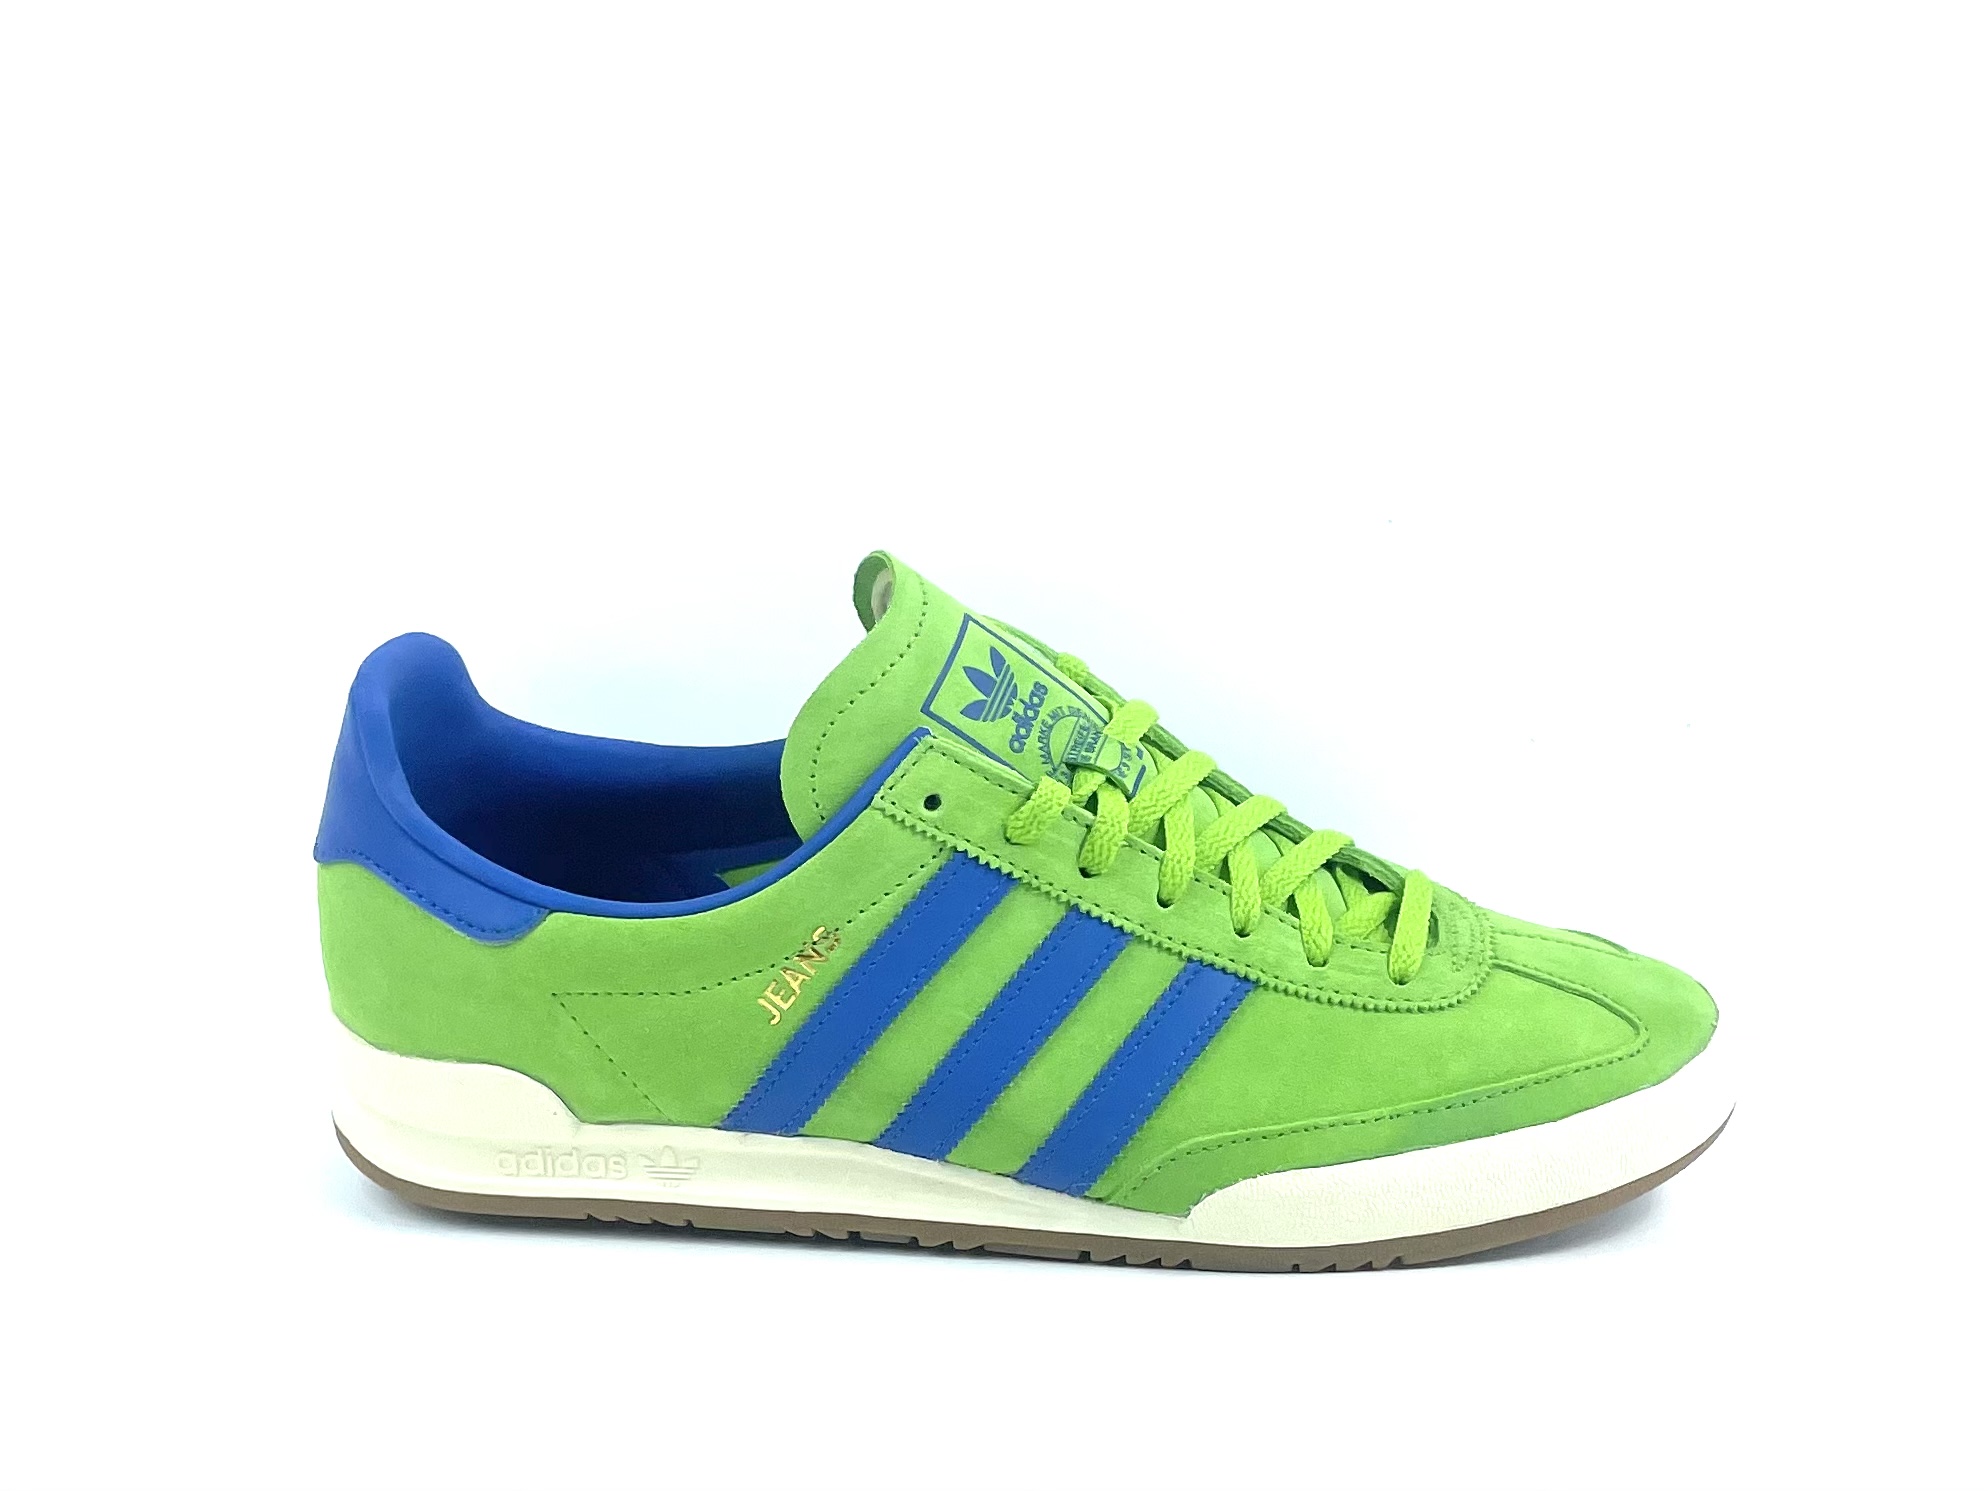 Adidas Originals Schuhe (grün) - meinsportline.de